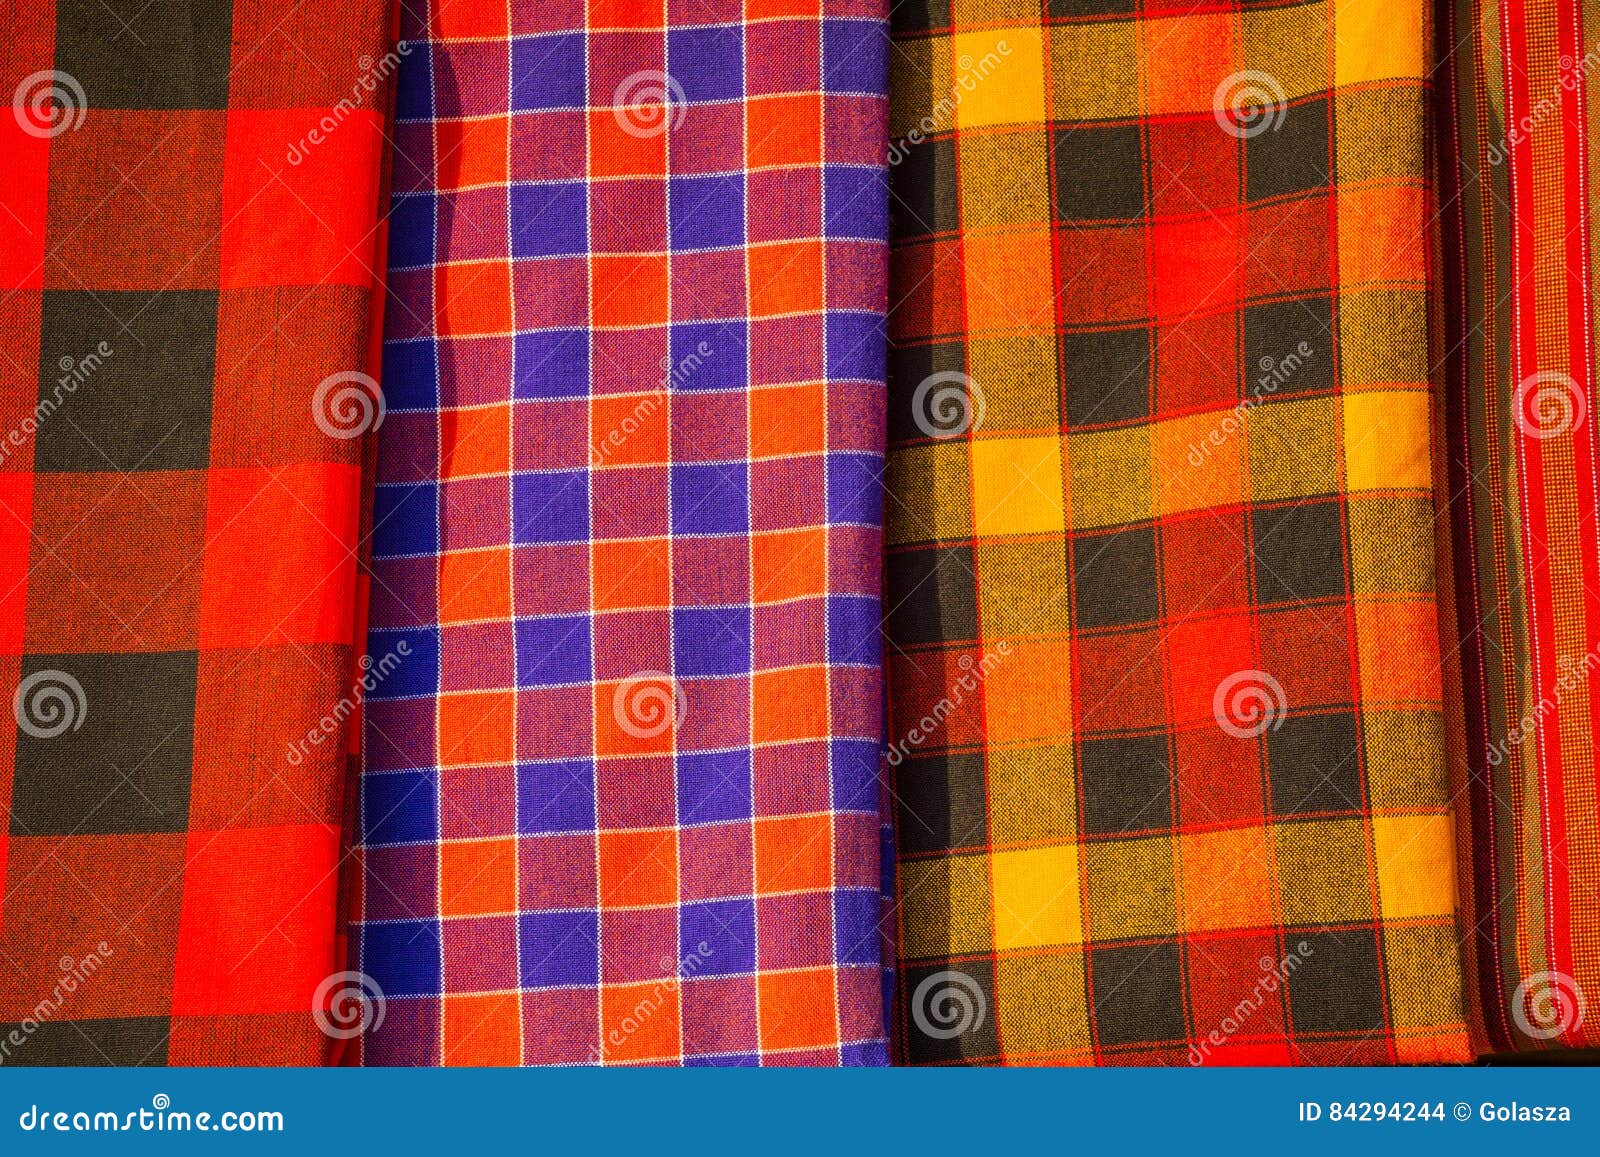 traditional maasai patterns